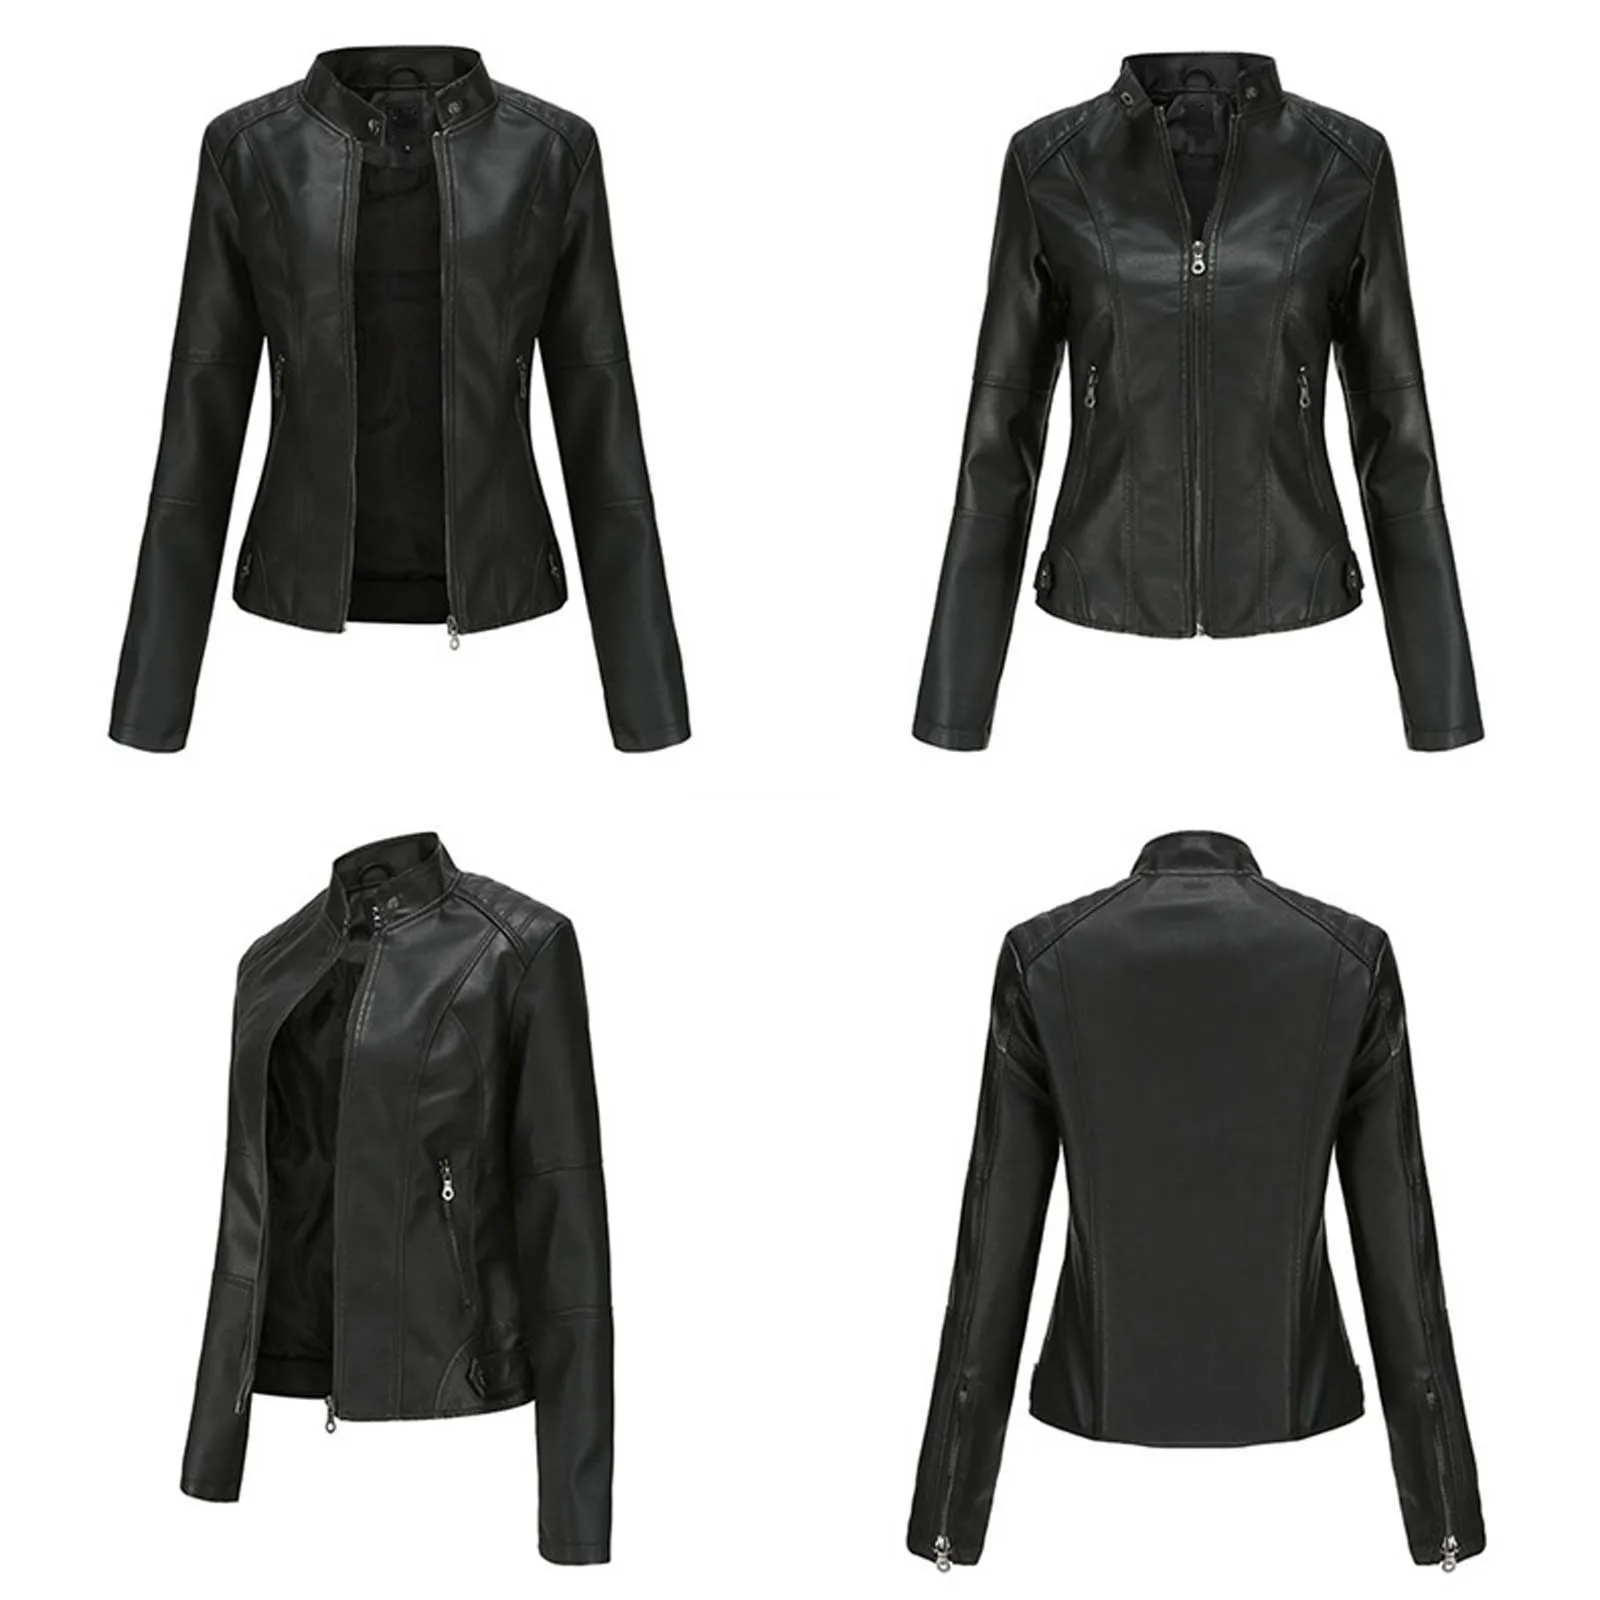 New Ladies Slim Faux Leather Jacket Stand-Up Collar Long Sleeve Overcoat Zipper Cardigan Short Coat 2021 enlarge